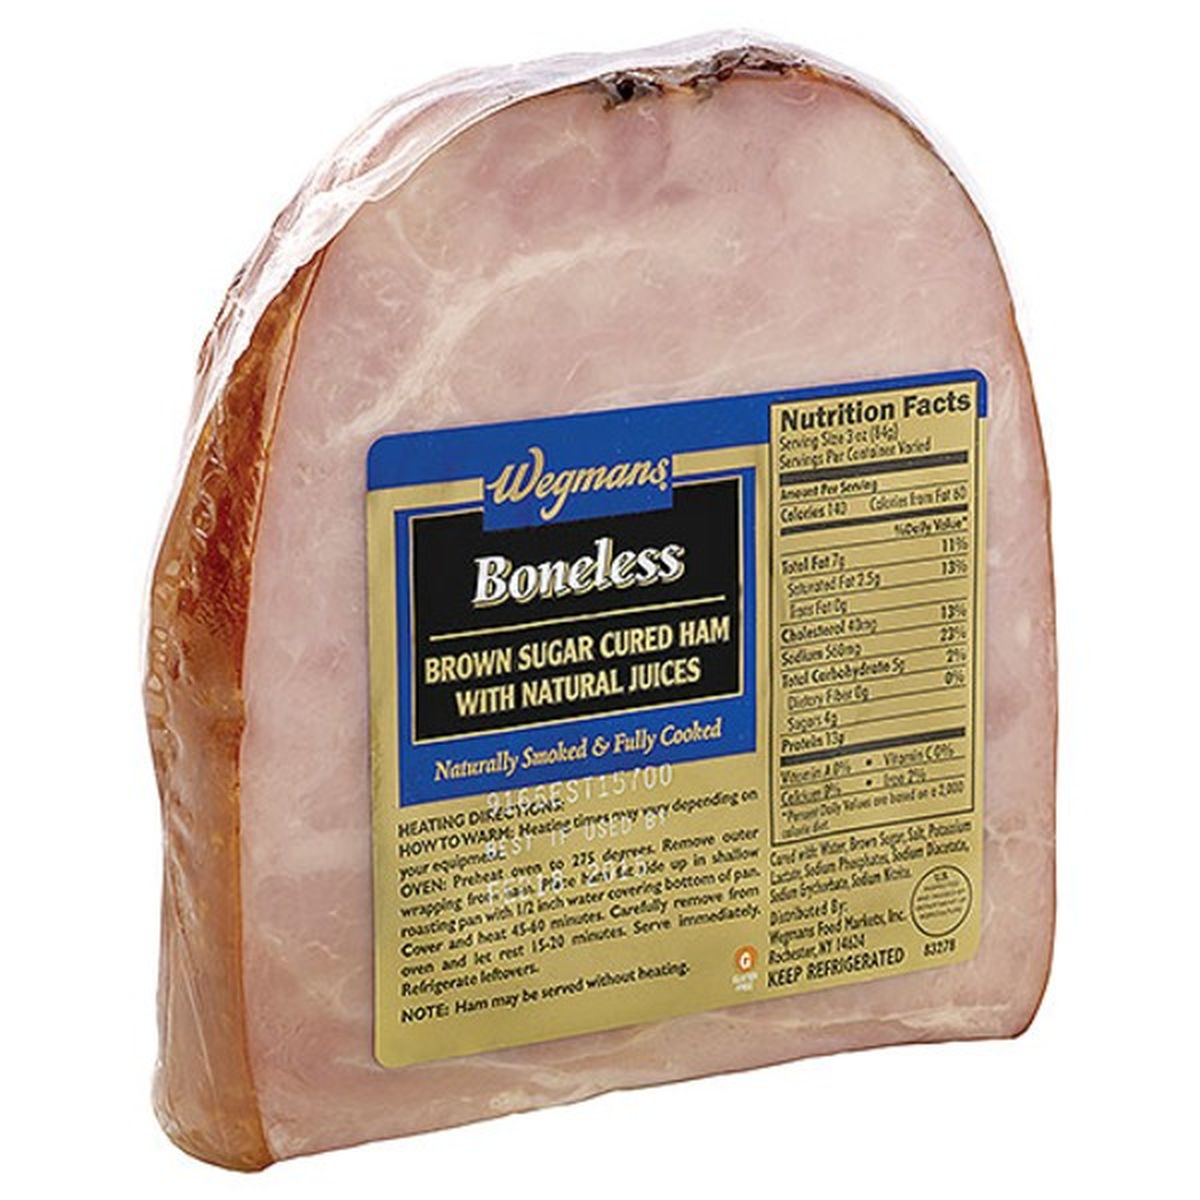 Calories in Wegmans Brown Sugar Boneless Cured Ham